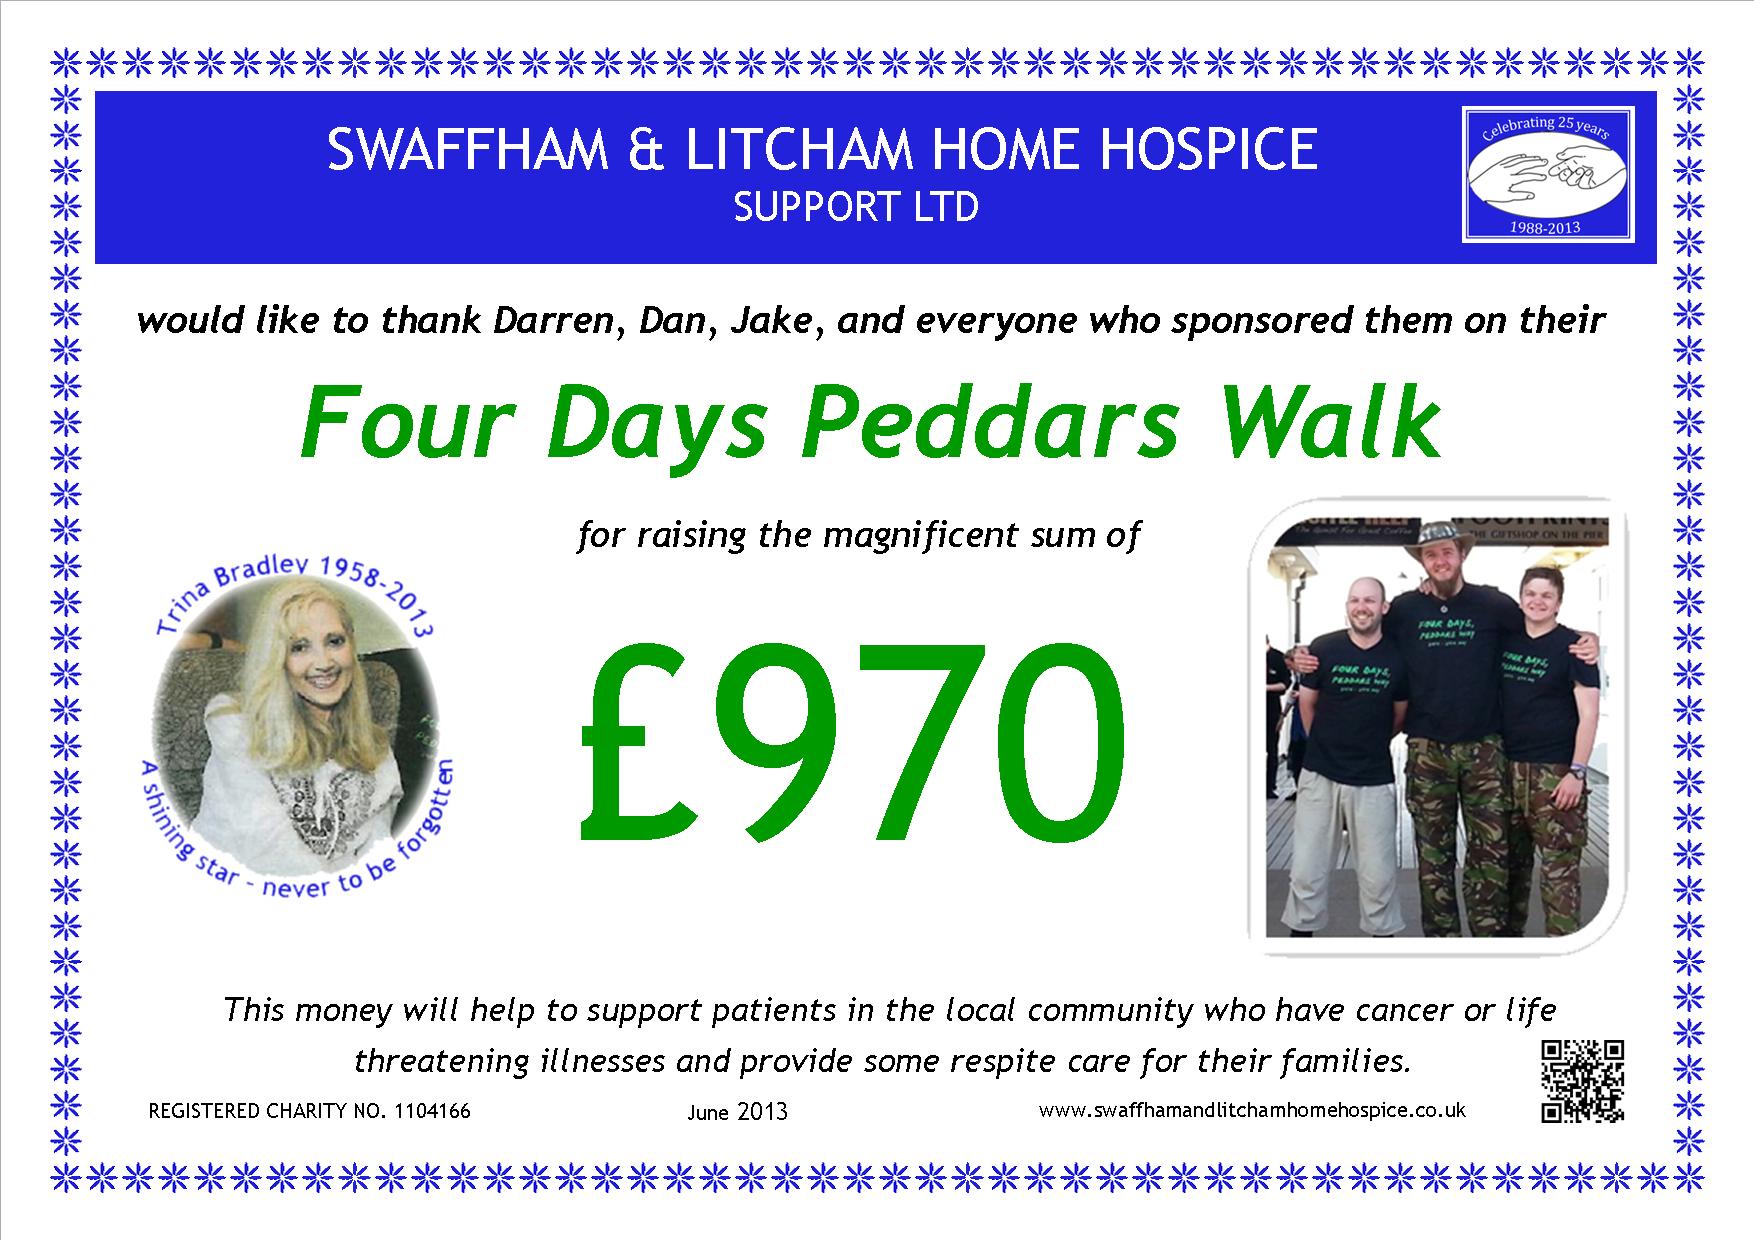 Four Days Peddars Walk - June - £970